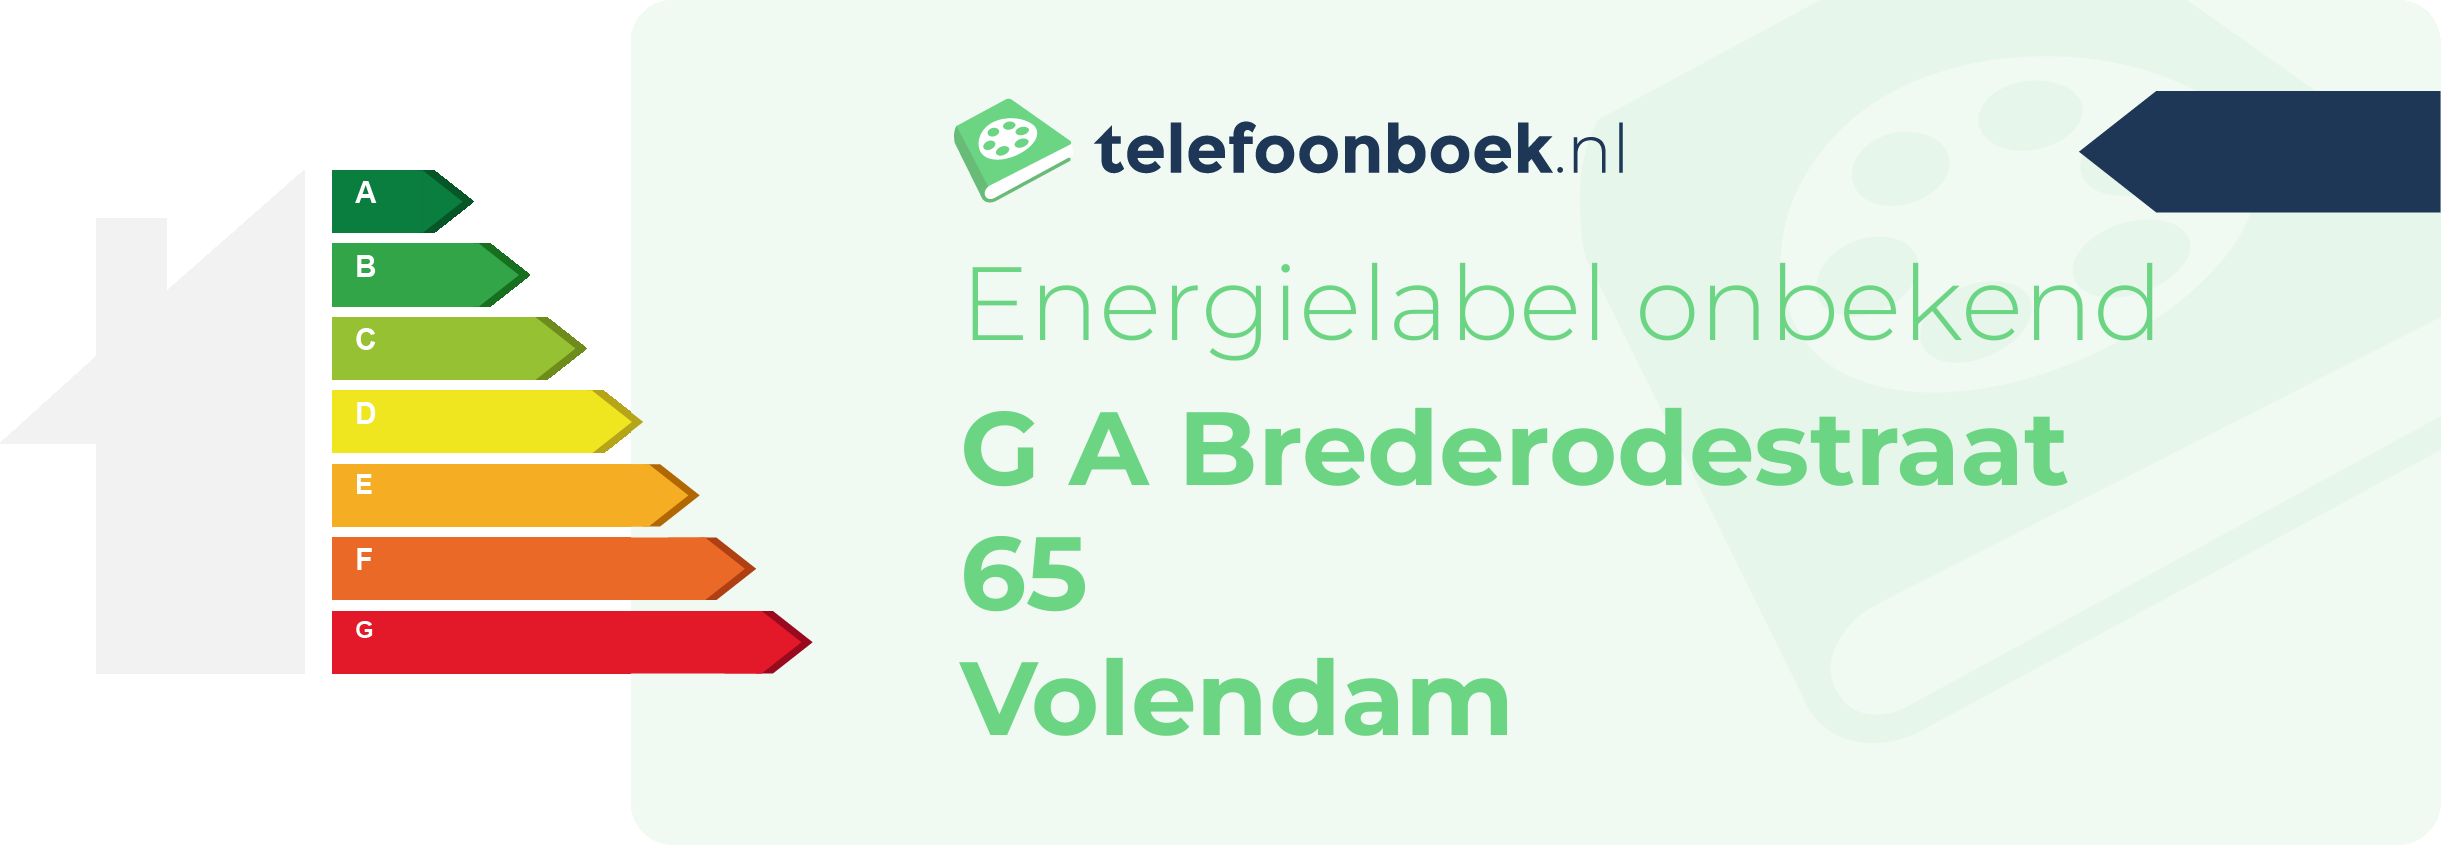 Energielabel G A Brederodestraat 65 Volendam